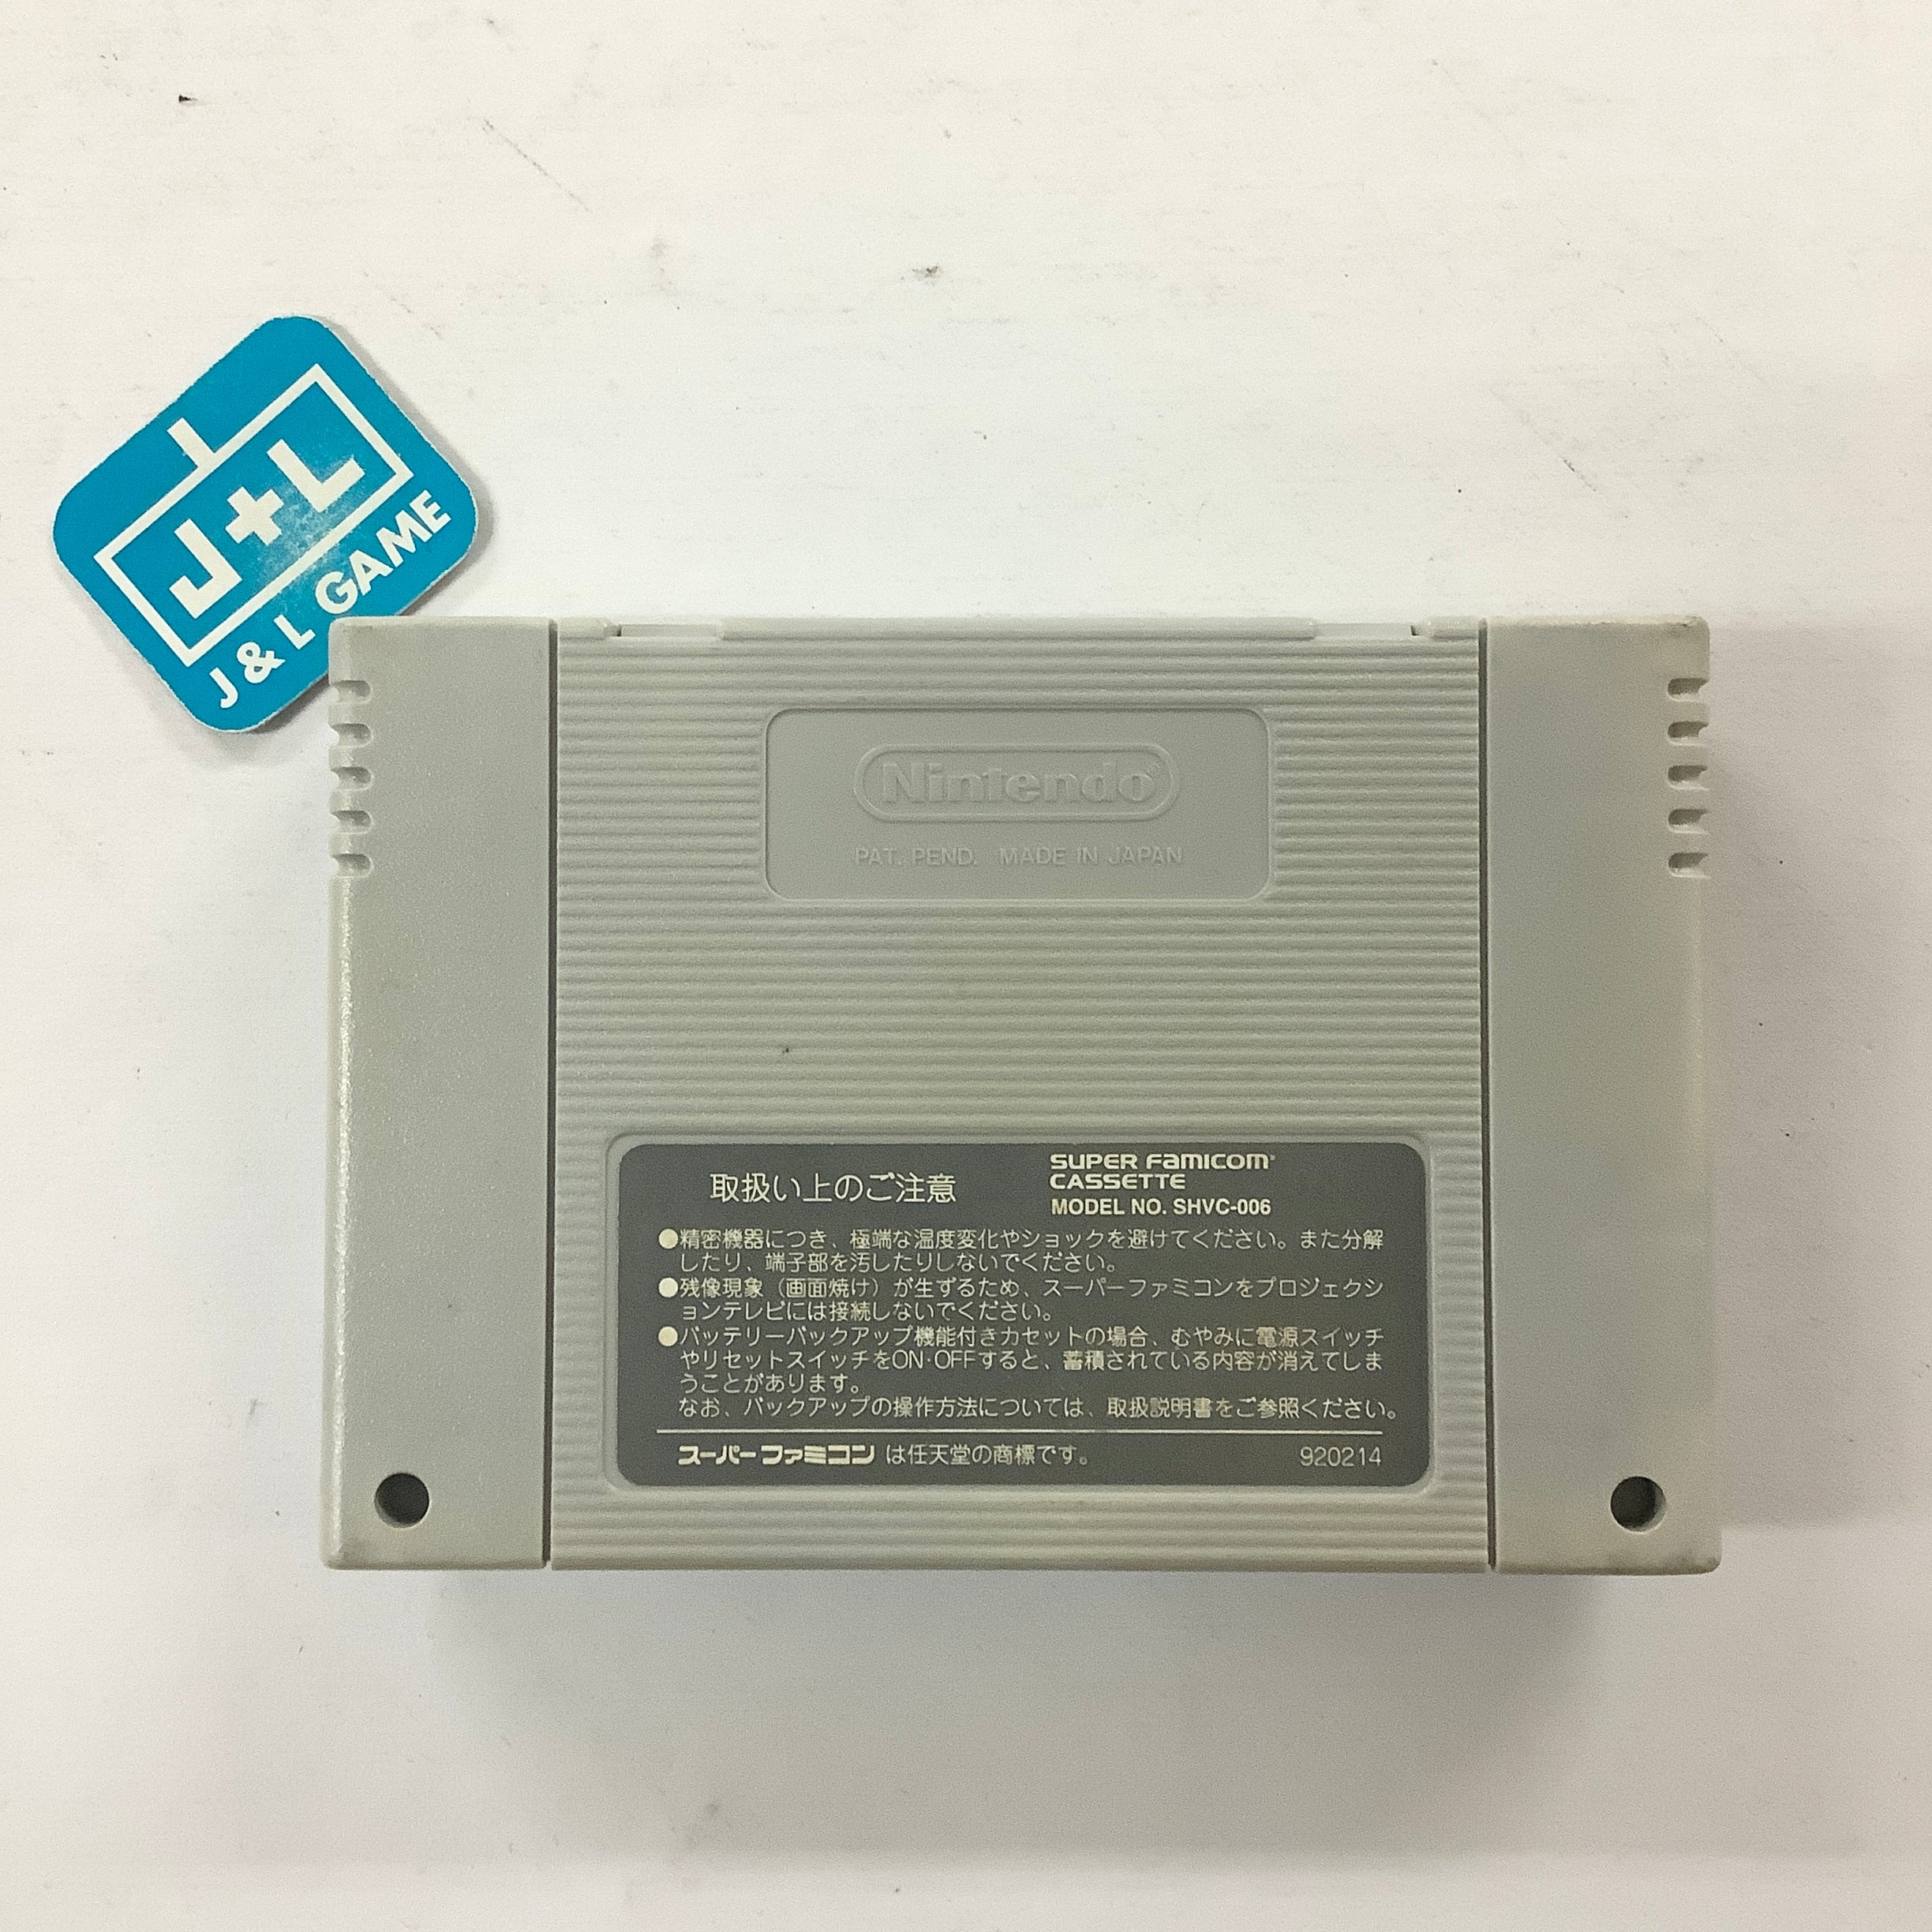 Super Famista 2 - (SFC) Super Famicom [Pre-Owned] (Japanese Import) Video Games Namco   